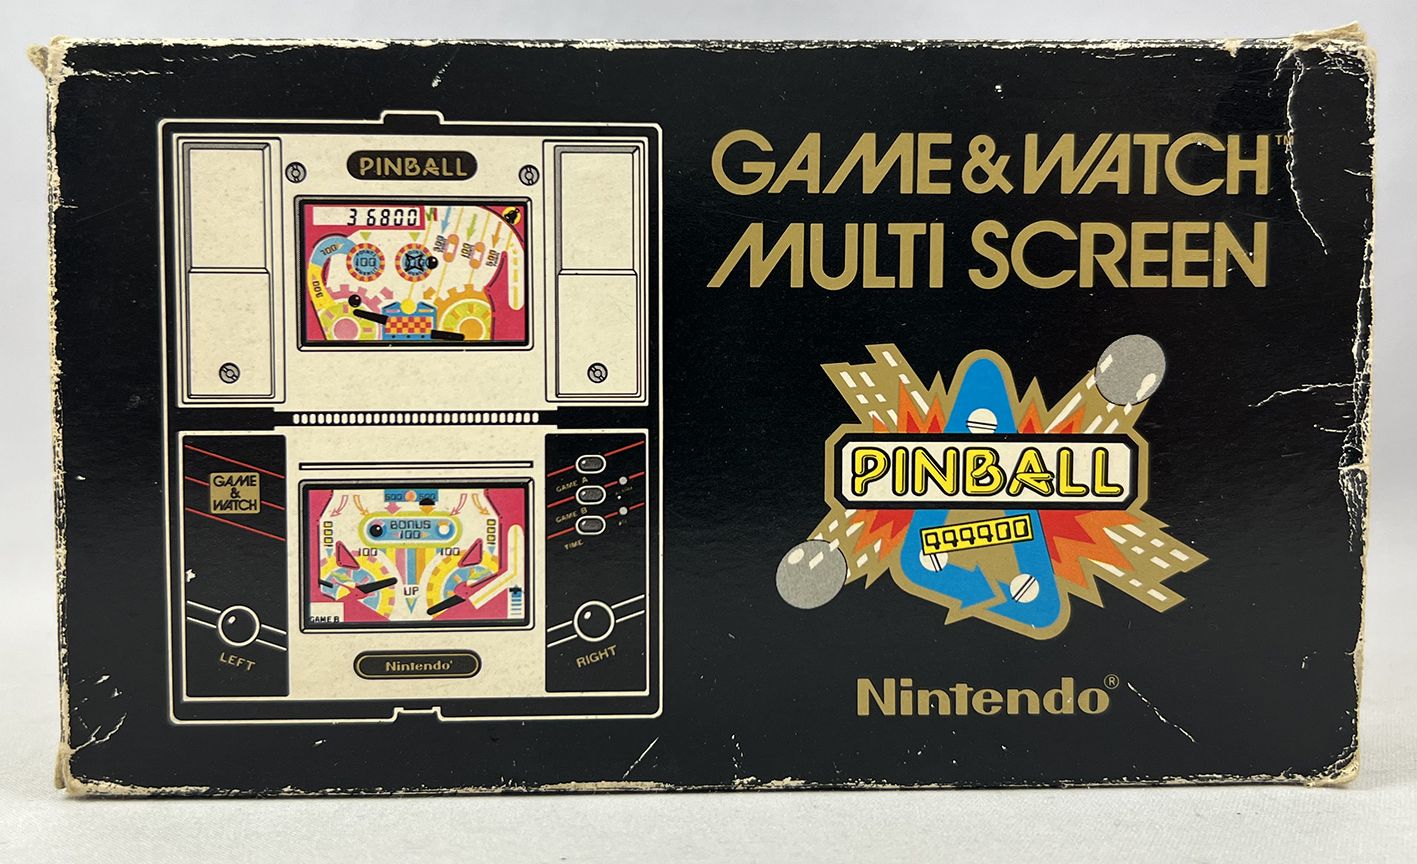 Nintendo Game & Watch - Multi Screen - Pinball (PB-59) occasion en